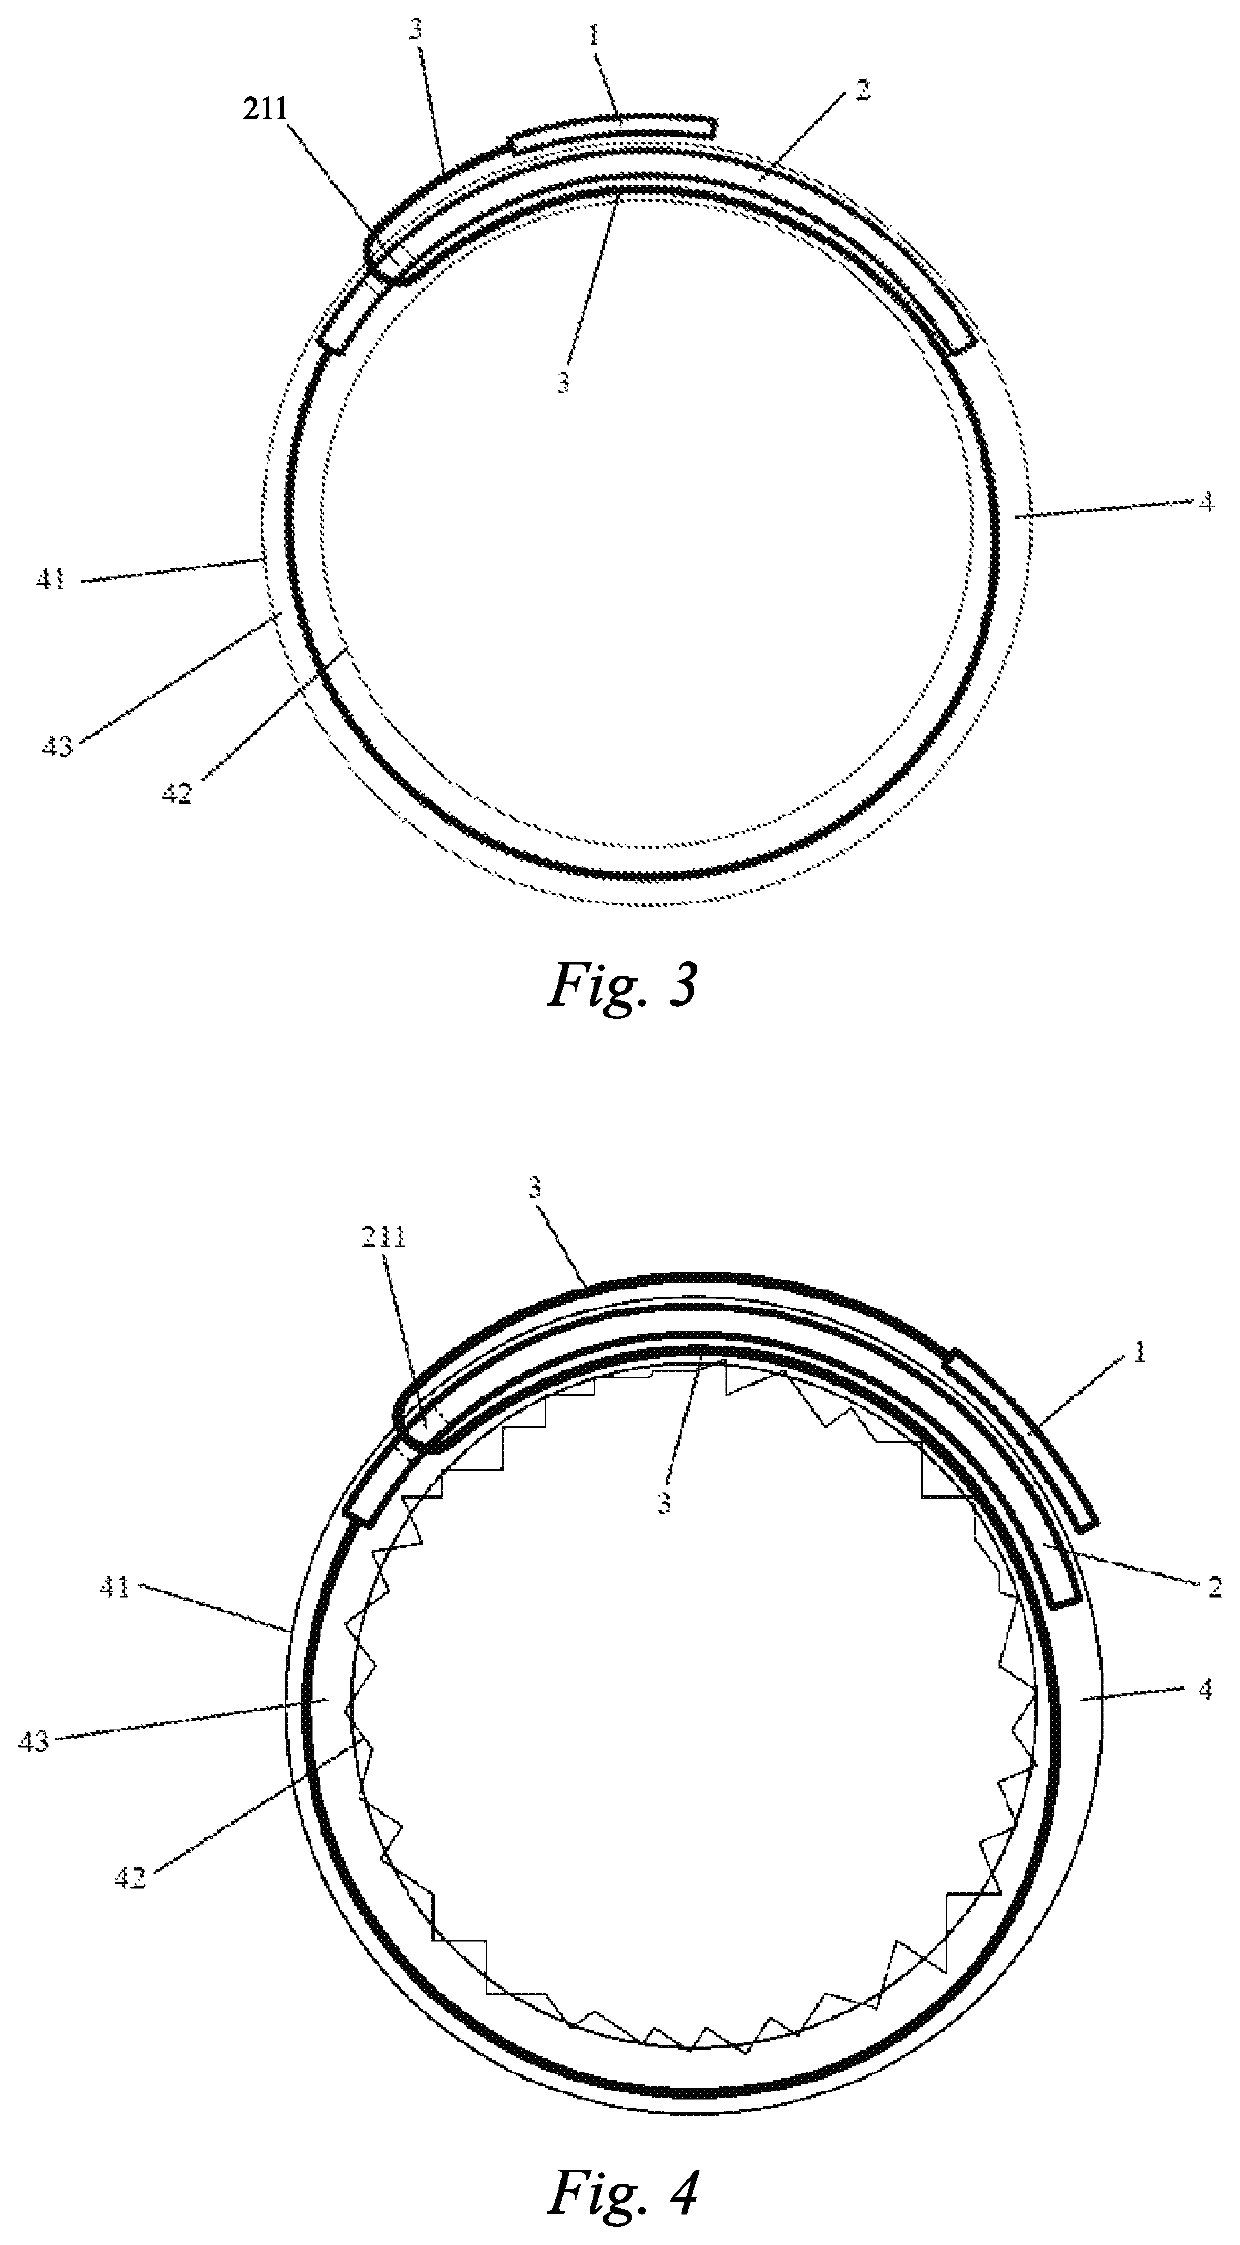 Adjusting strap for adjusting tube orifice diameter of flexible tube-shaped object